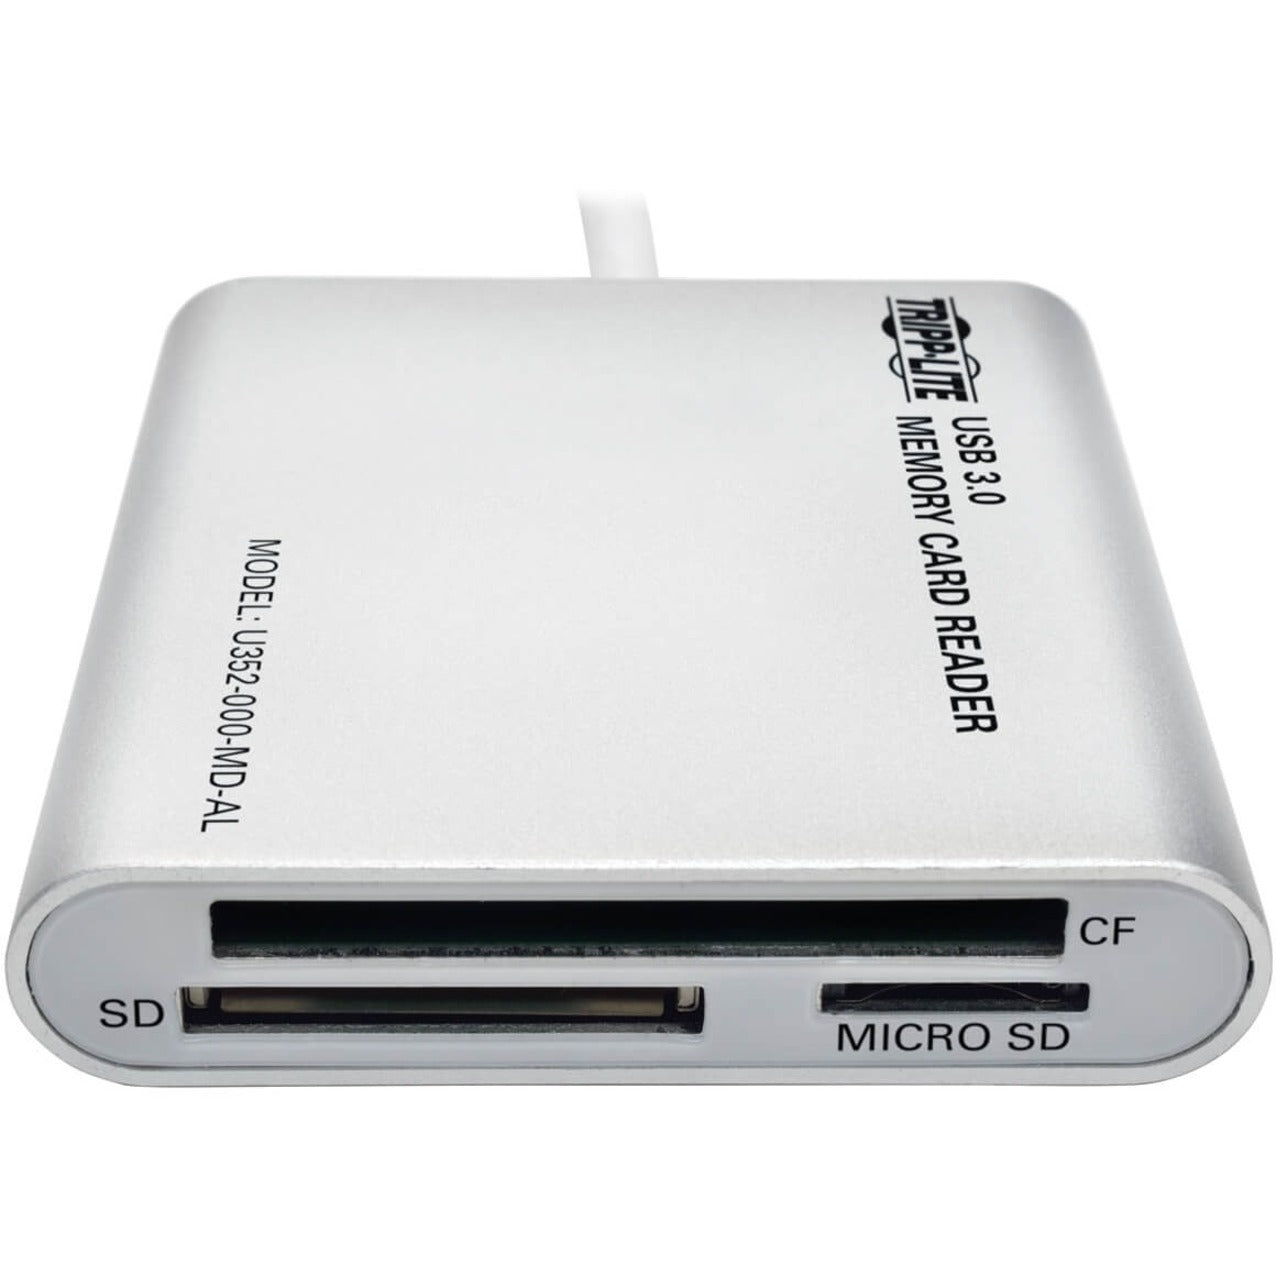 Tripp Lite U352-000-MD-AL USB 3.0 SuperSpeed Multi-Drive Memory Card Reader/Writer, Aluminum Case